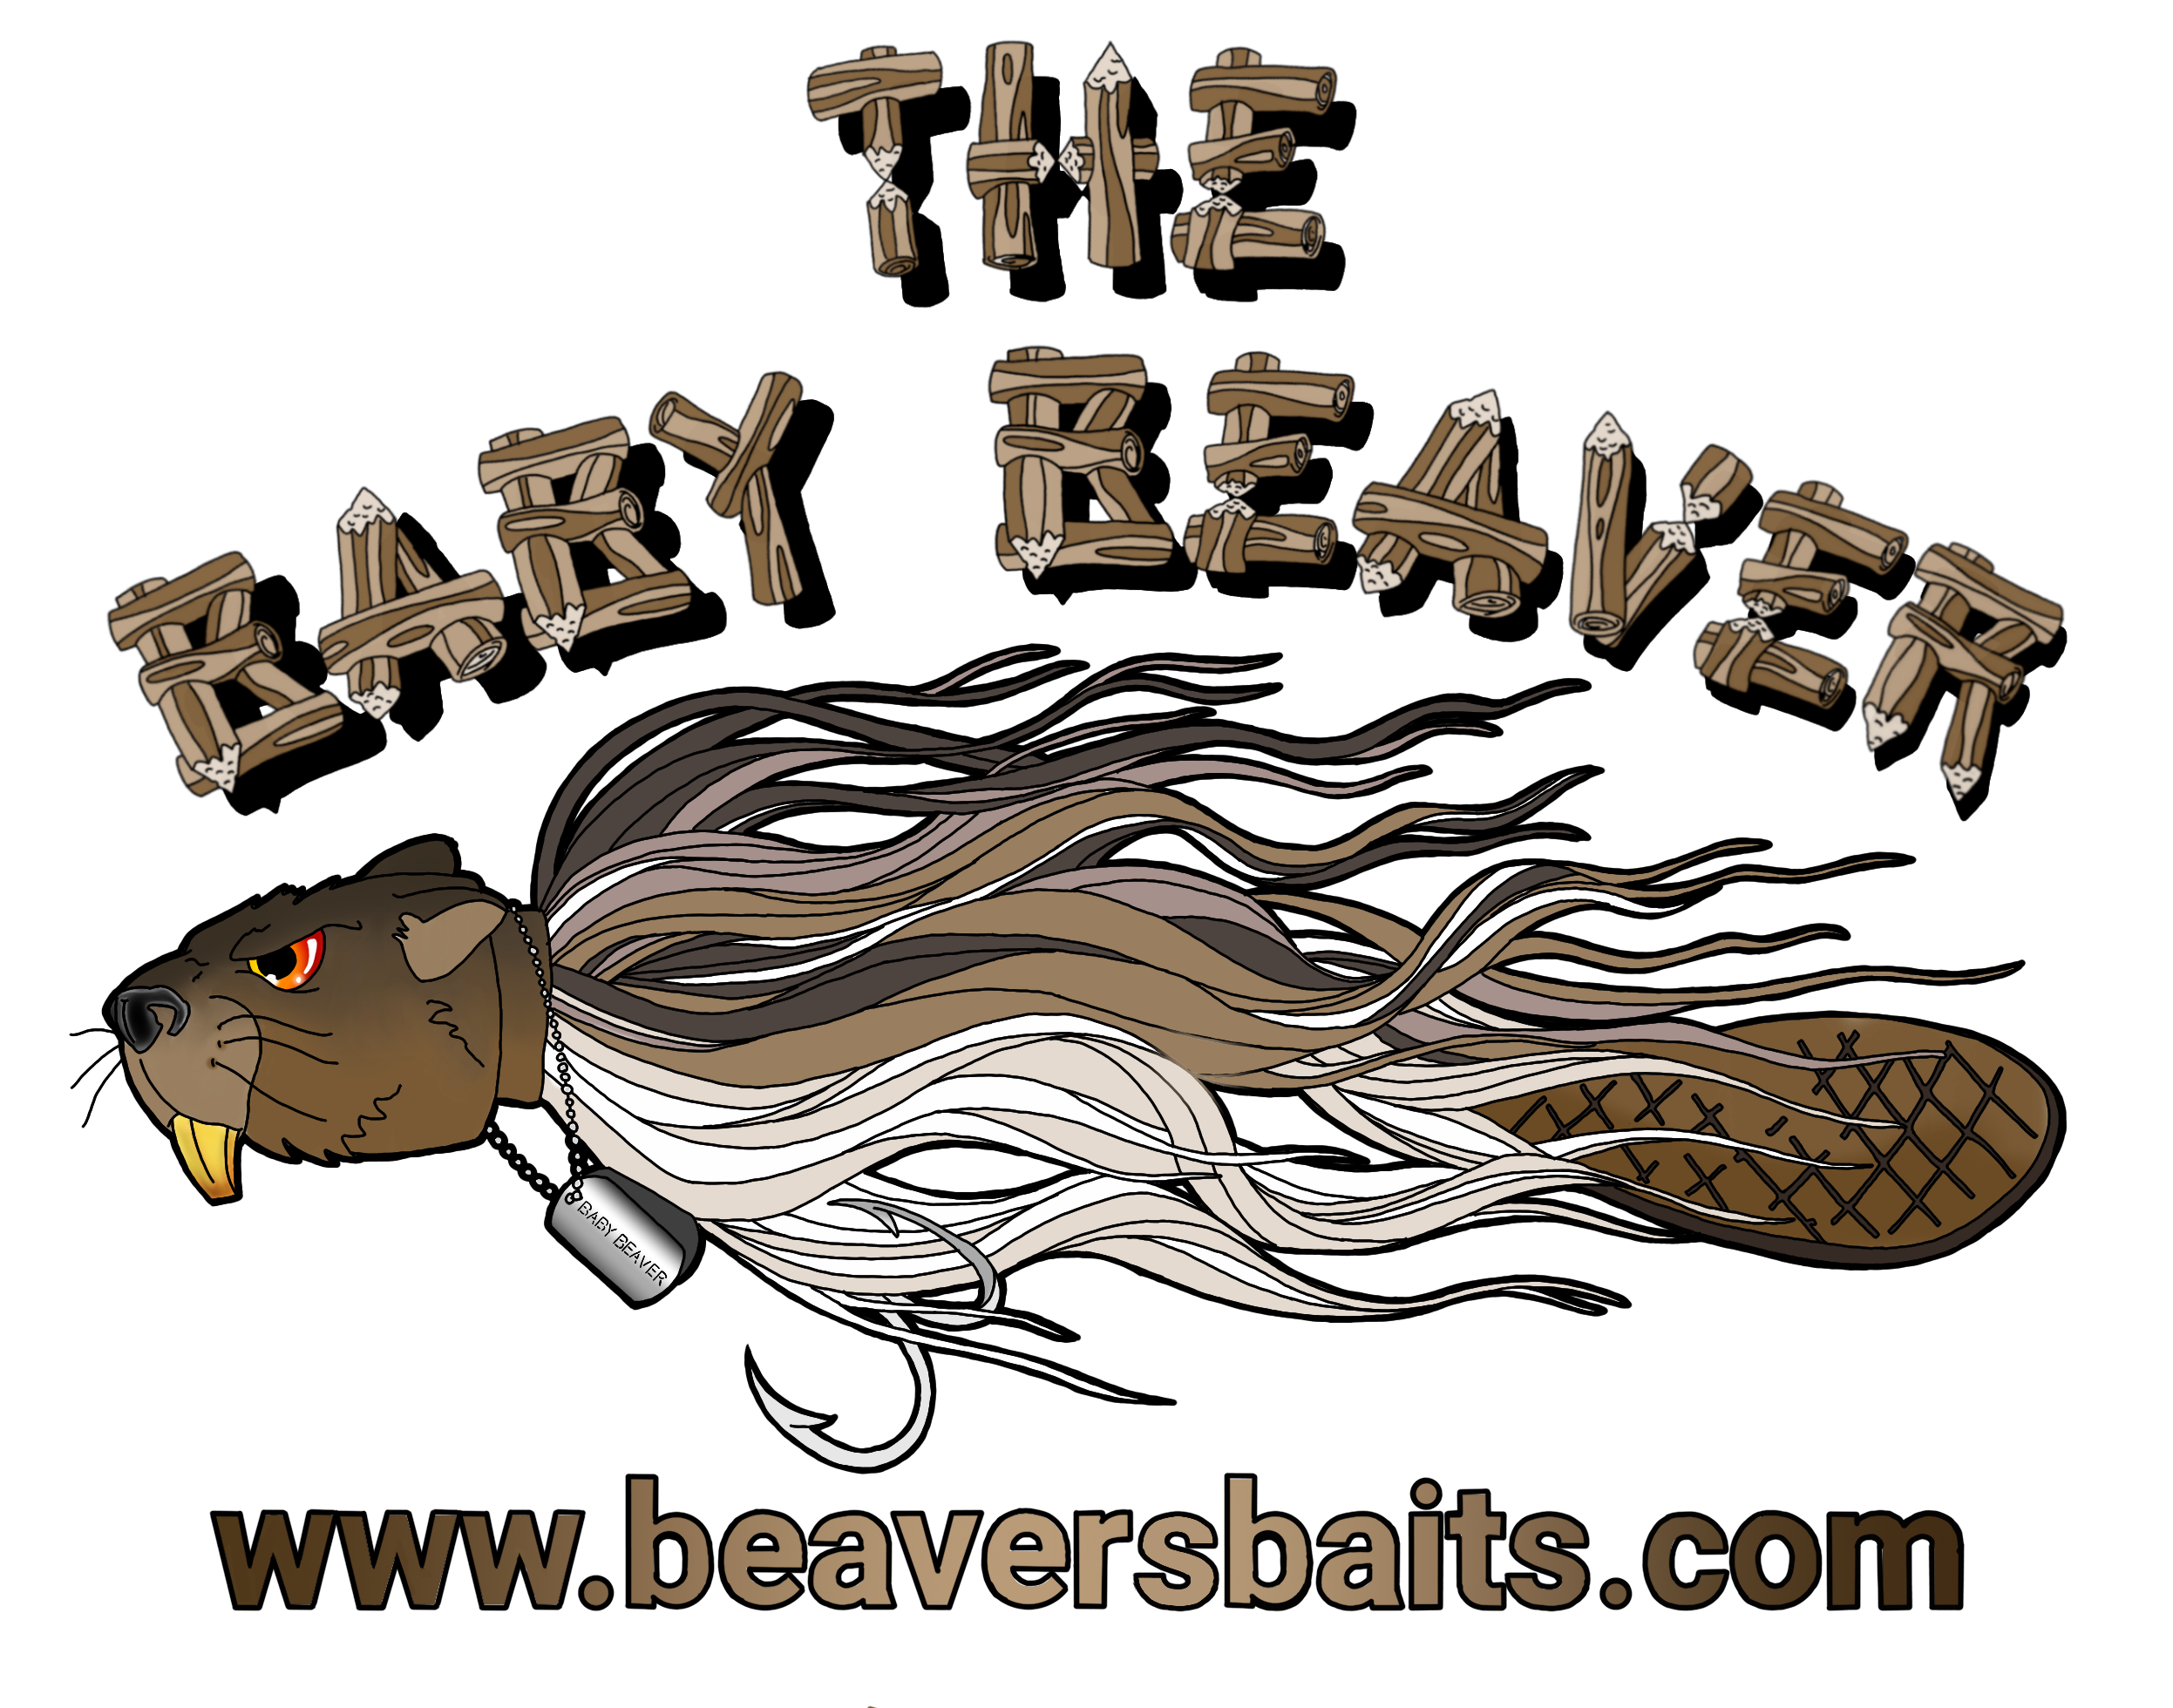 Shop — Beaver's Baits LLC